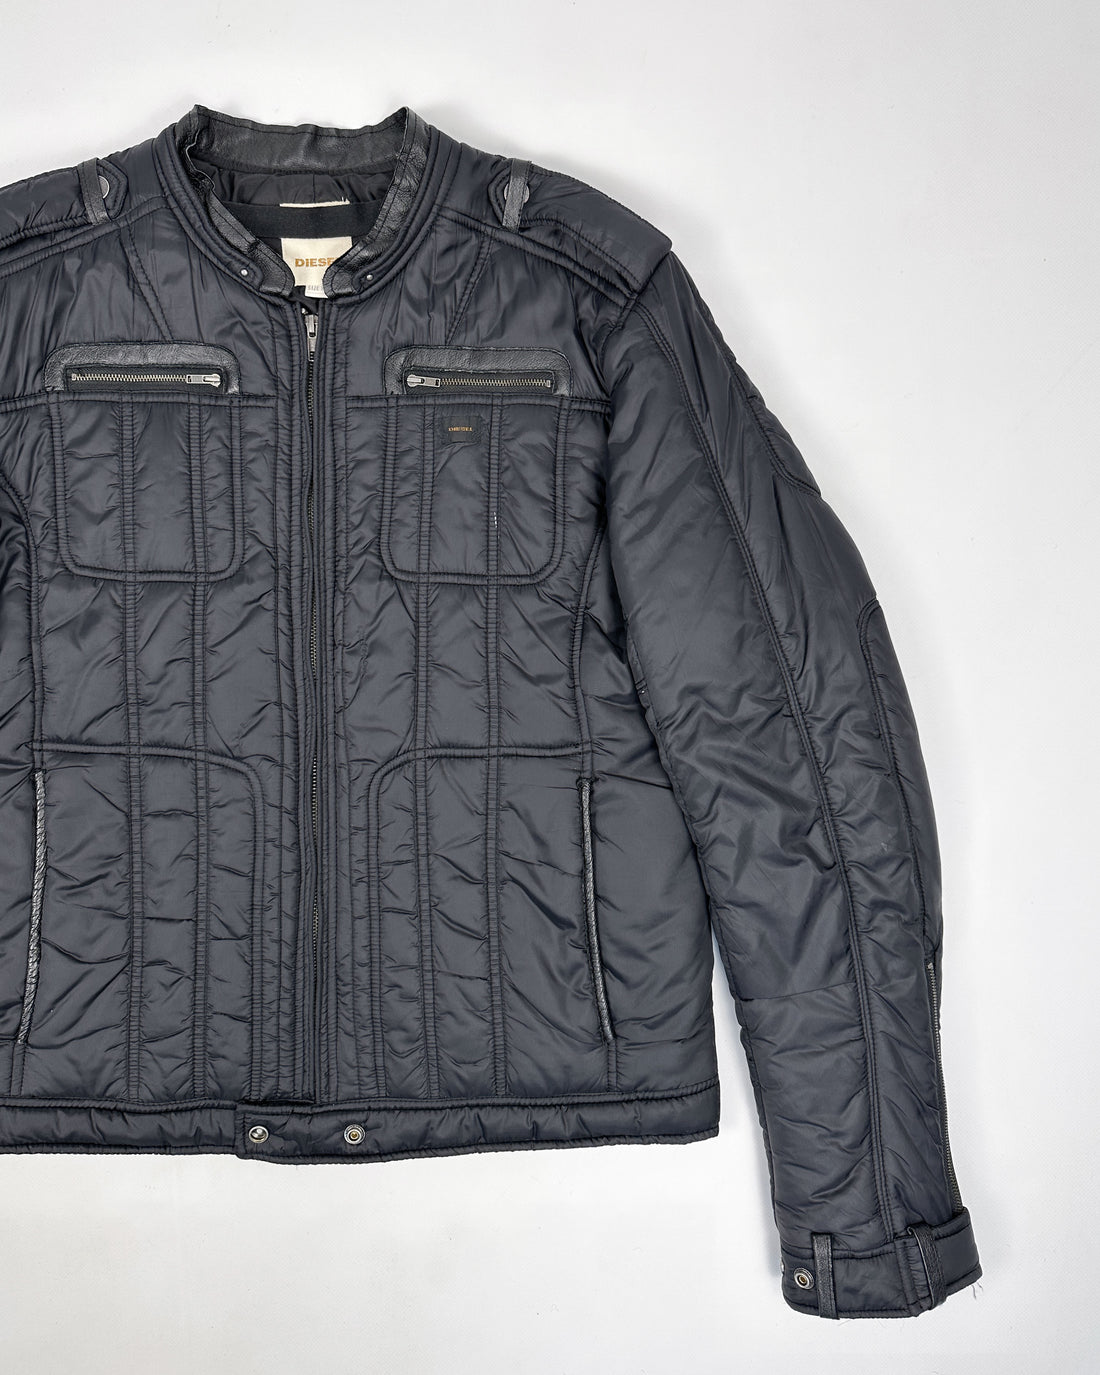 Diesel Leather Details Black Puffer Jacket 2000's